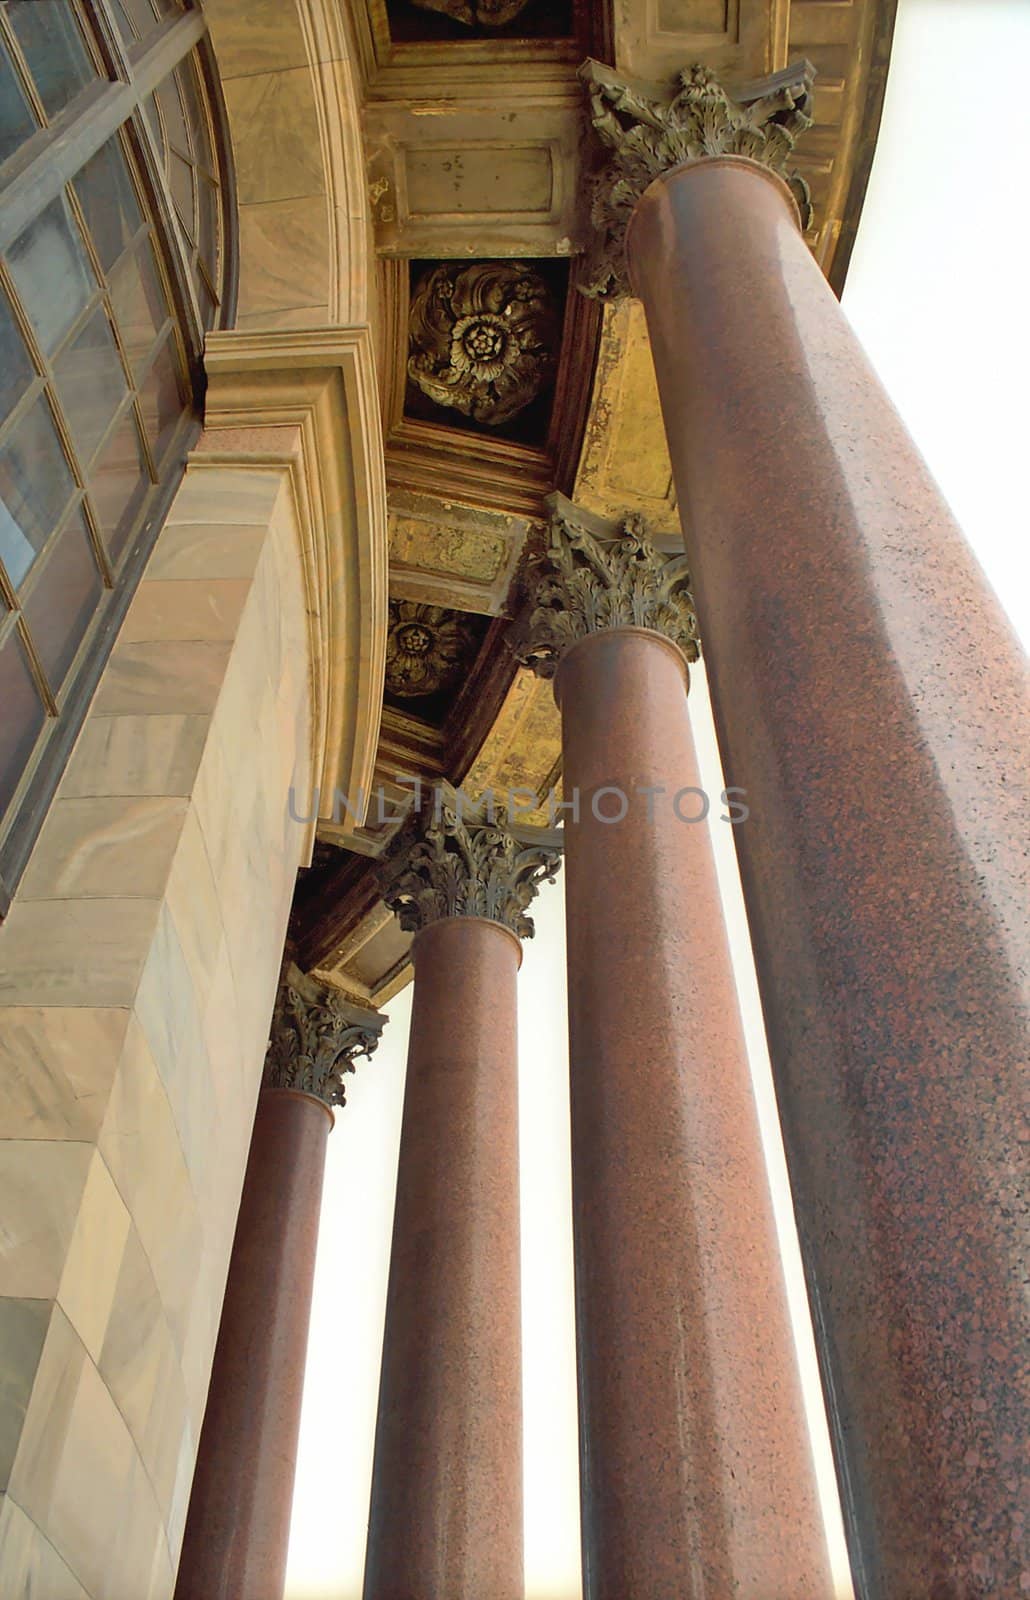 Corinthian order columns close up